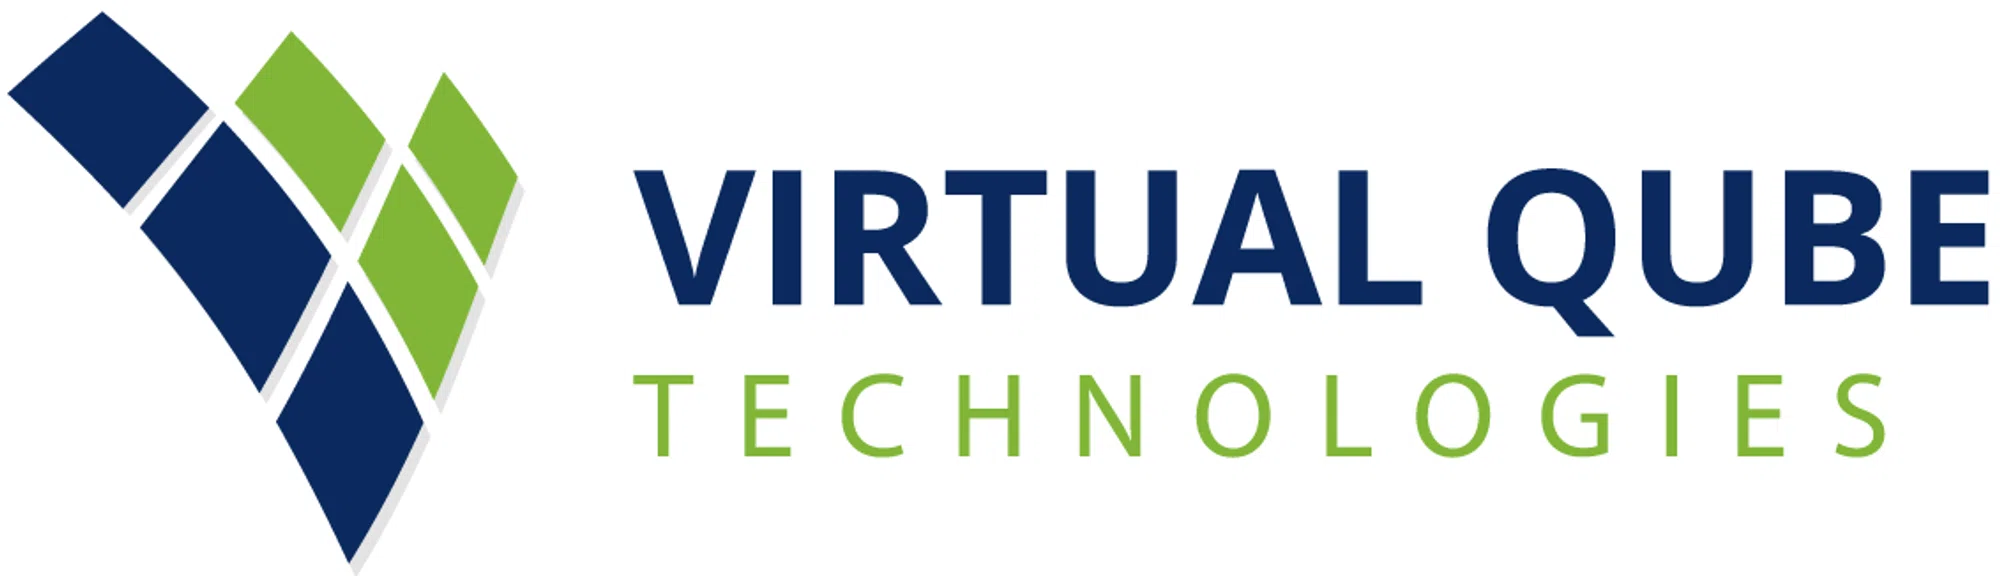 Virtual Qube Technologies